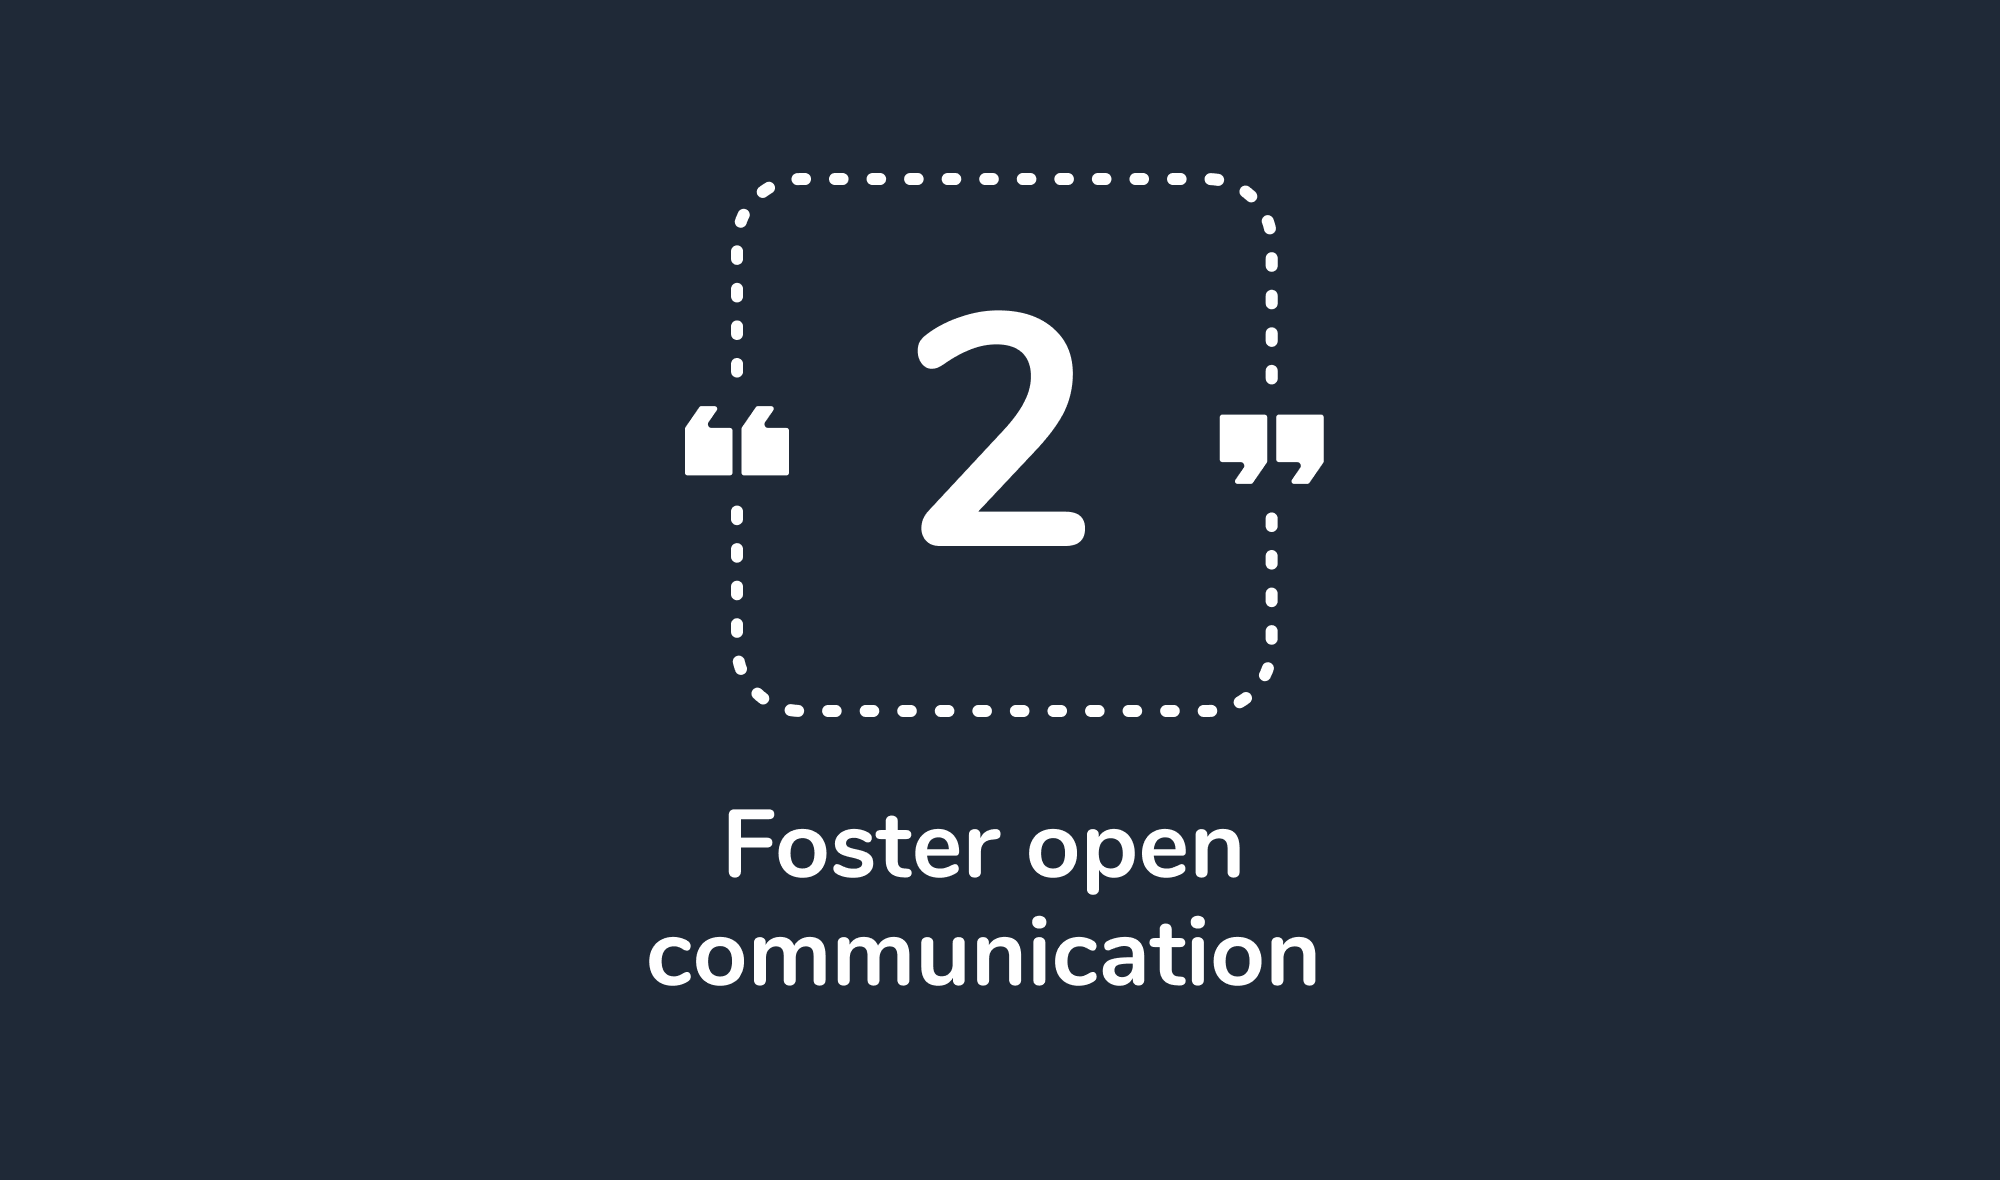 Foster open communication